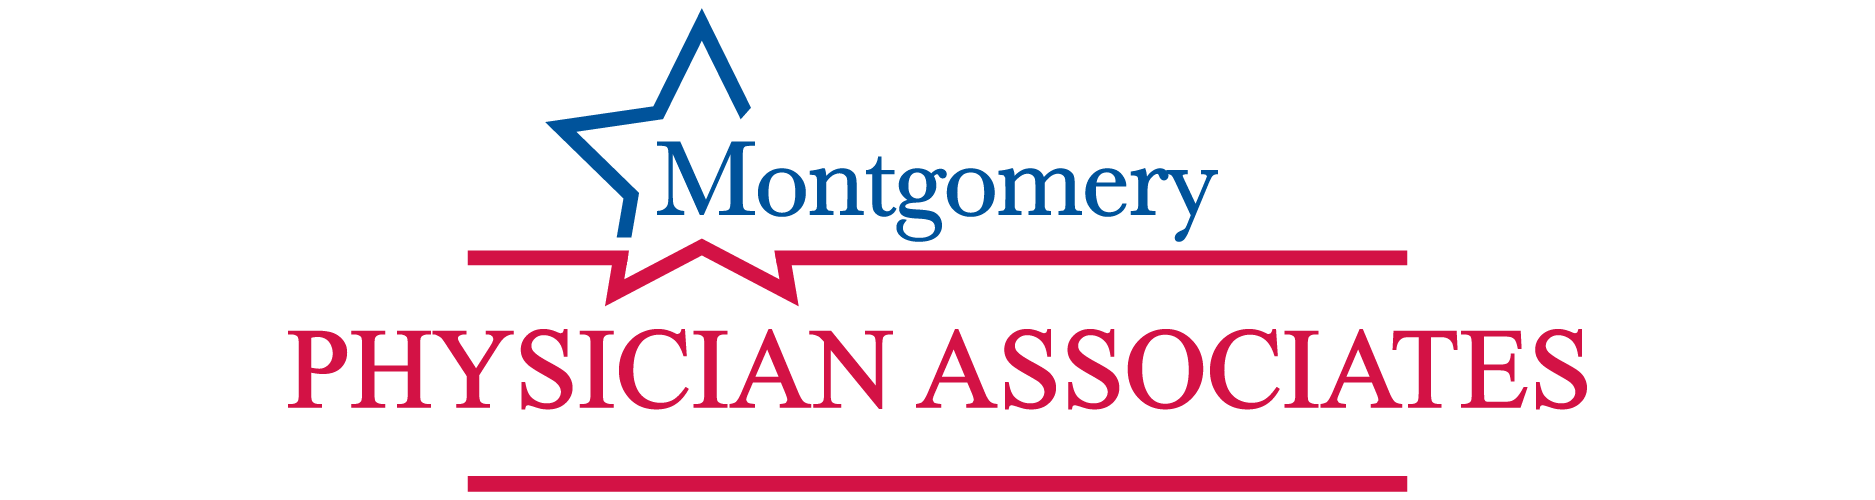 Montgomery Physician Associates